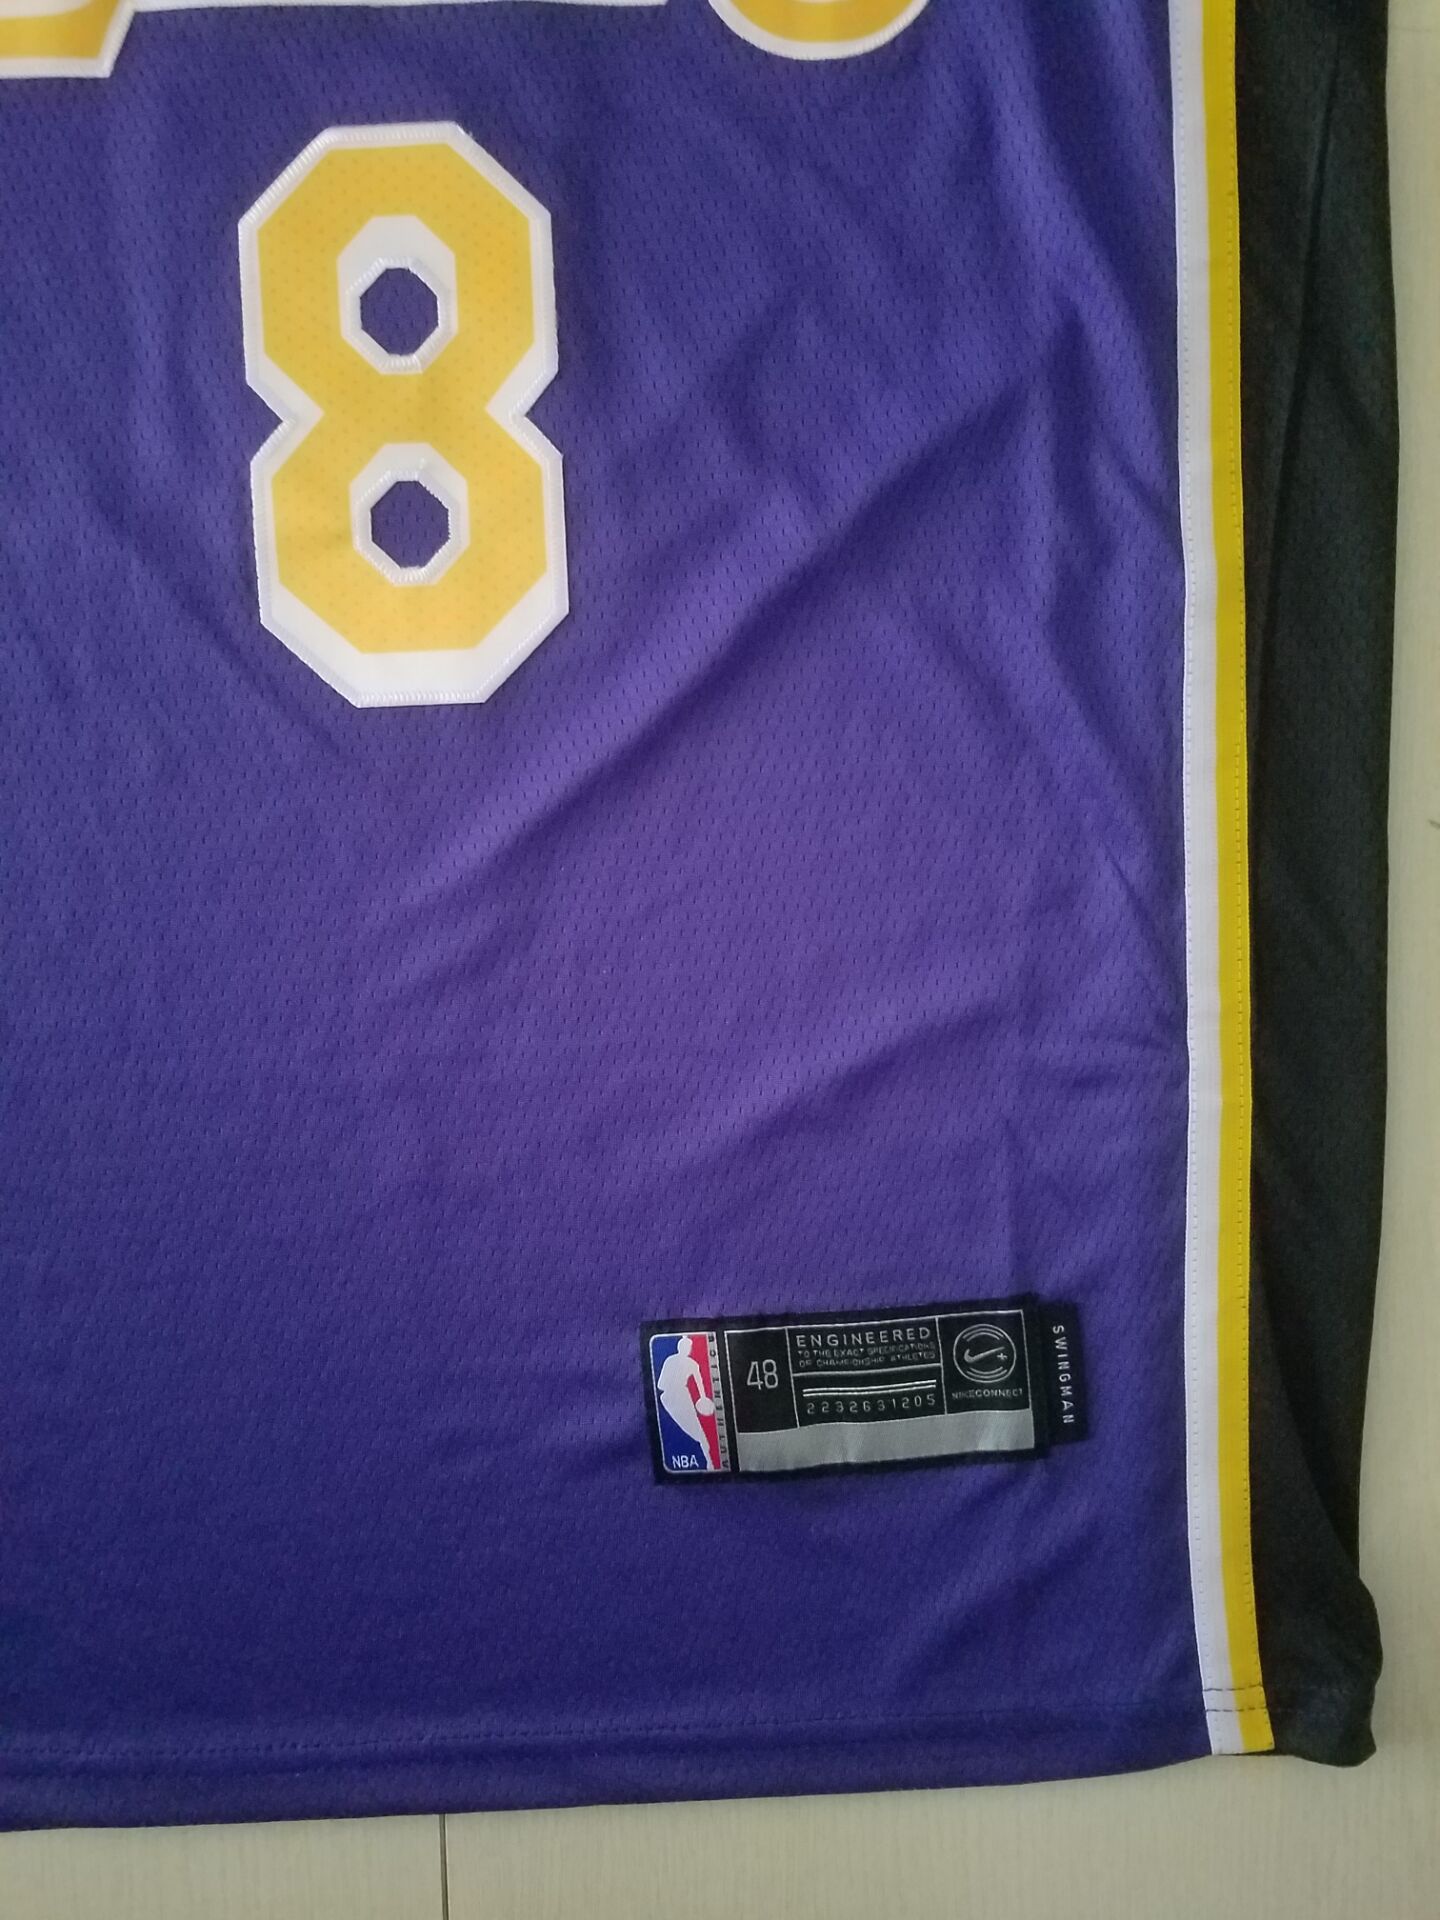 Men's Los Angeles Lakers Kobe Bryant #8 Purple Swingman Player Jersey